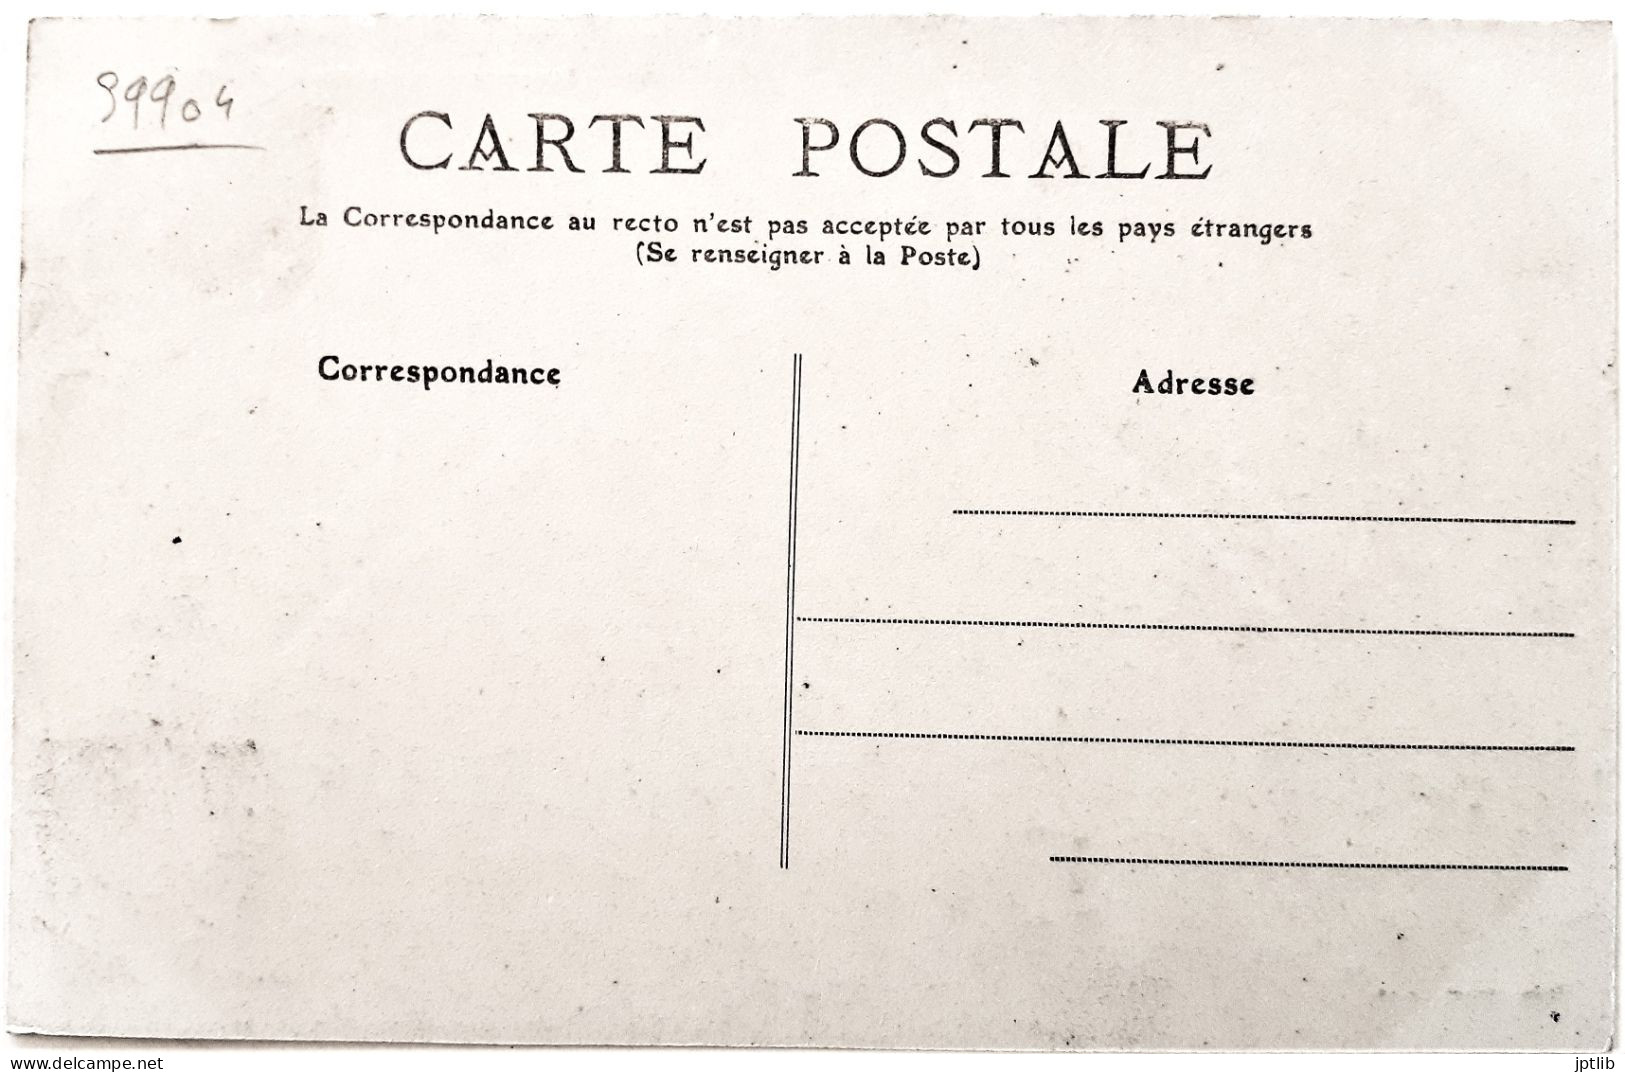 CPA Carte Postale / Indo-Chine, Indochine, Cambodge / Planté, éditeur - 151 / Souvenir Des Ruines D'Angkor. - Cambodia